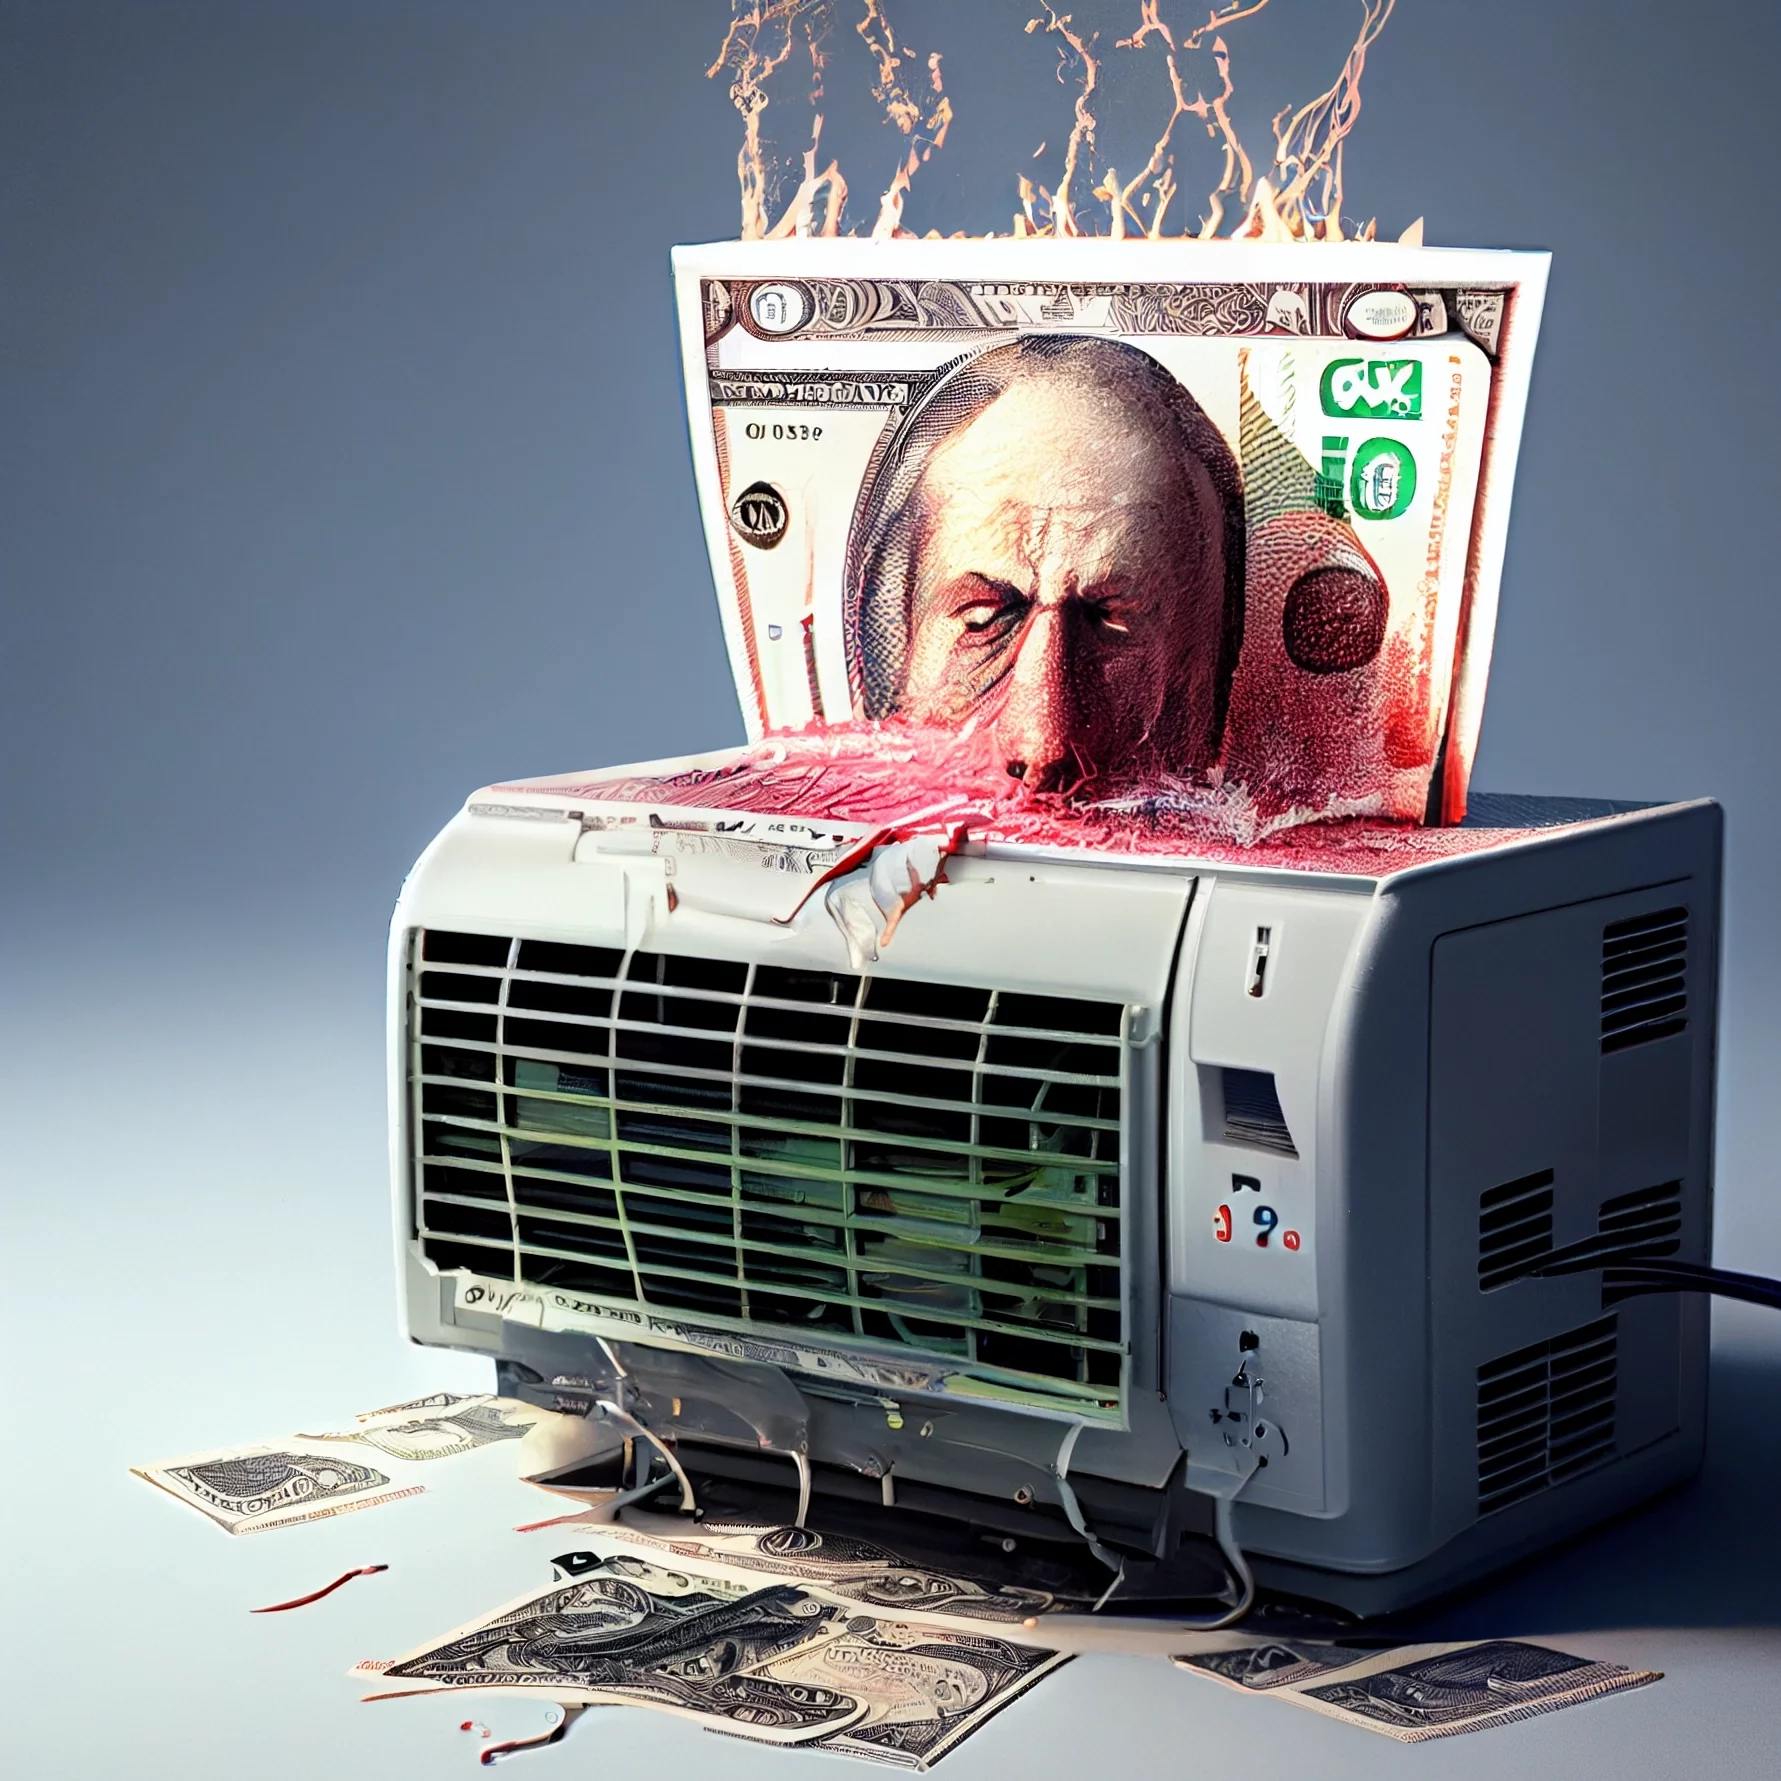 A hungry heat pump devours dollar bills as Massachusetts electricity prices soar